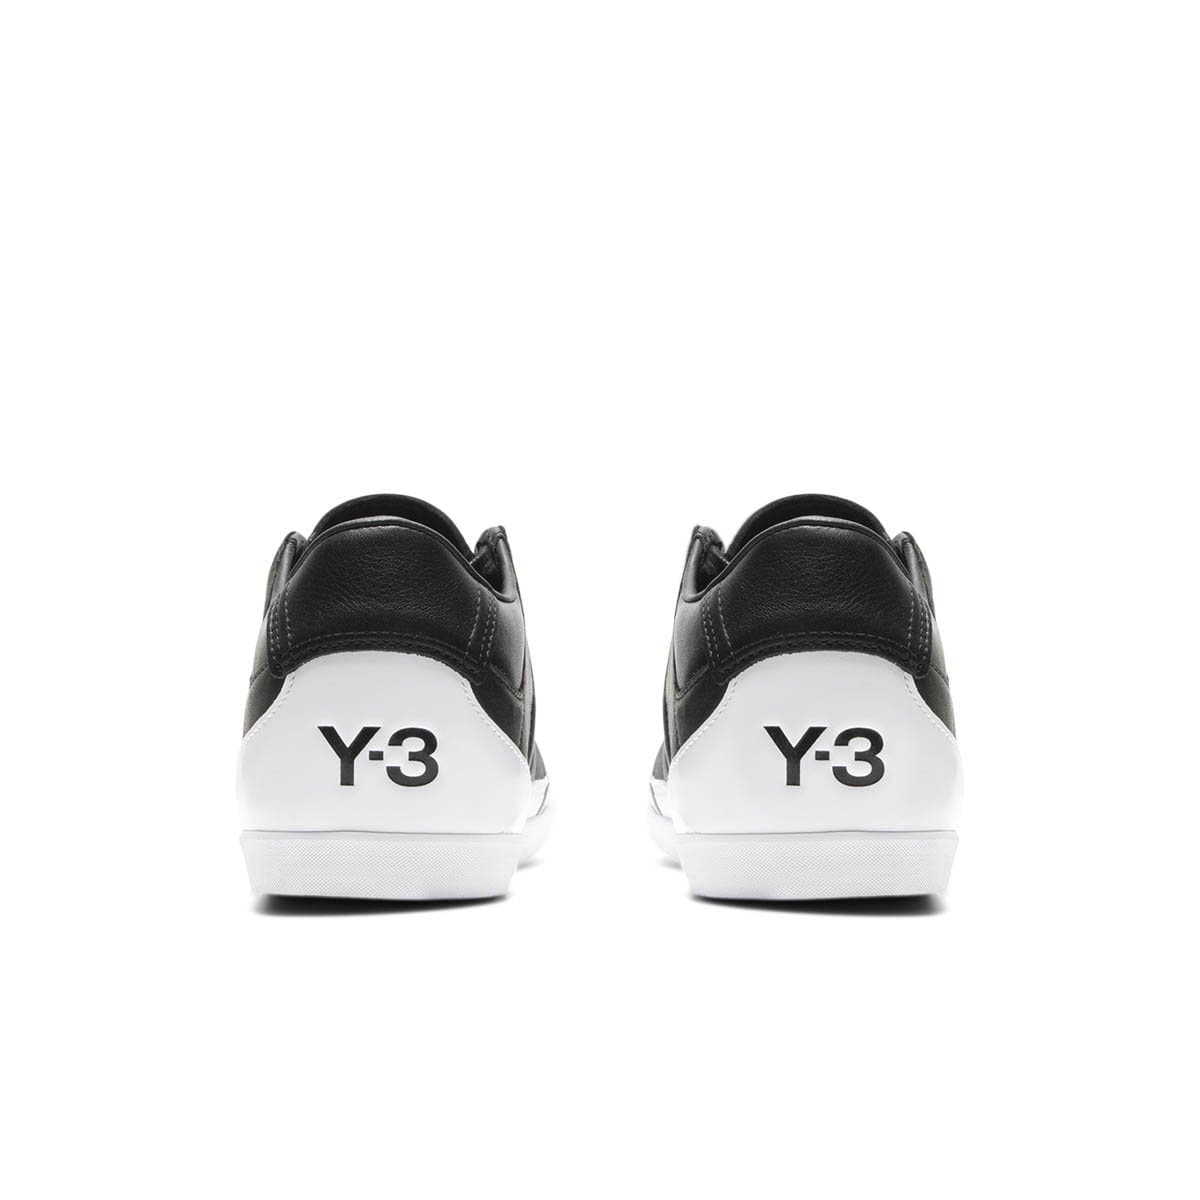 Adidas Y-3 Shoes Y-3 HONJA LOW